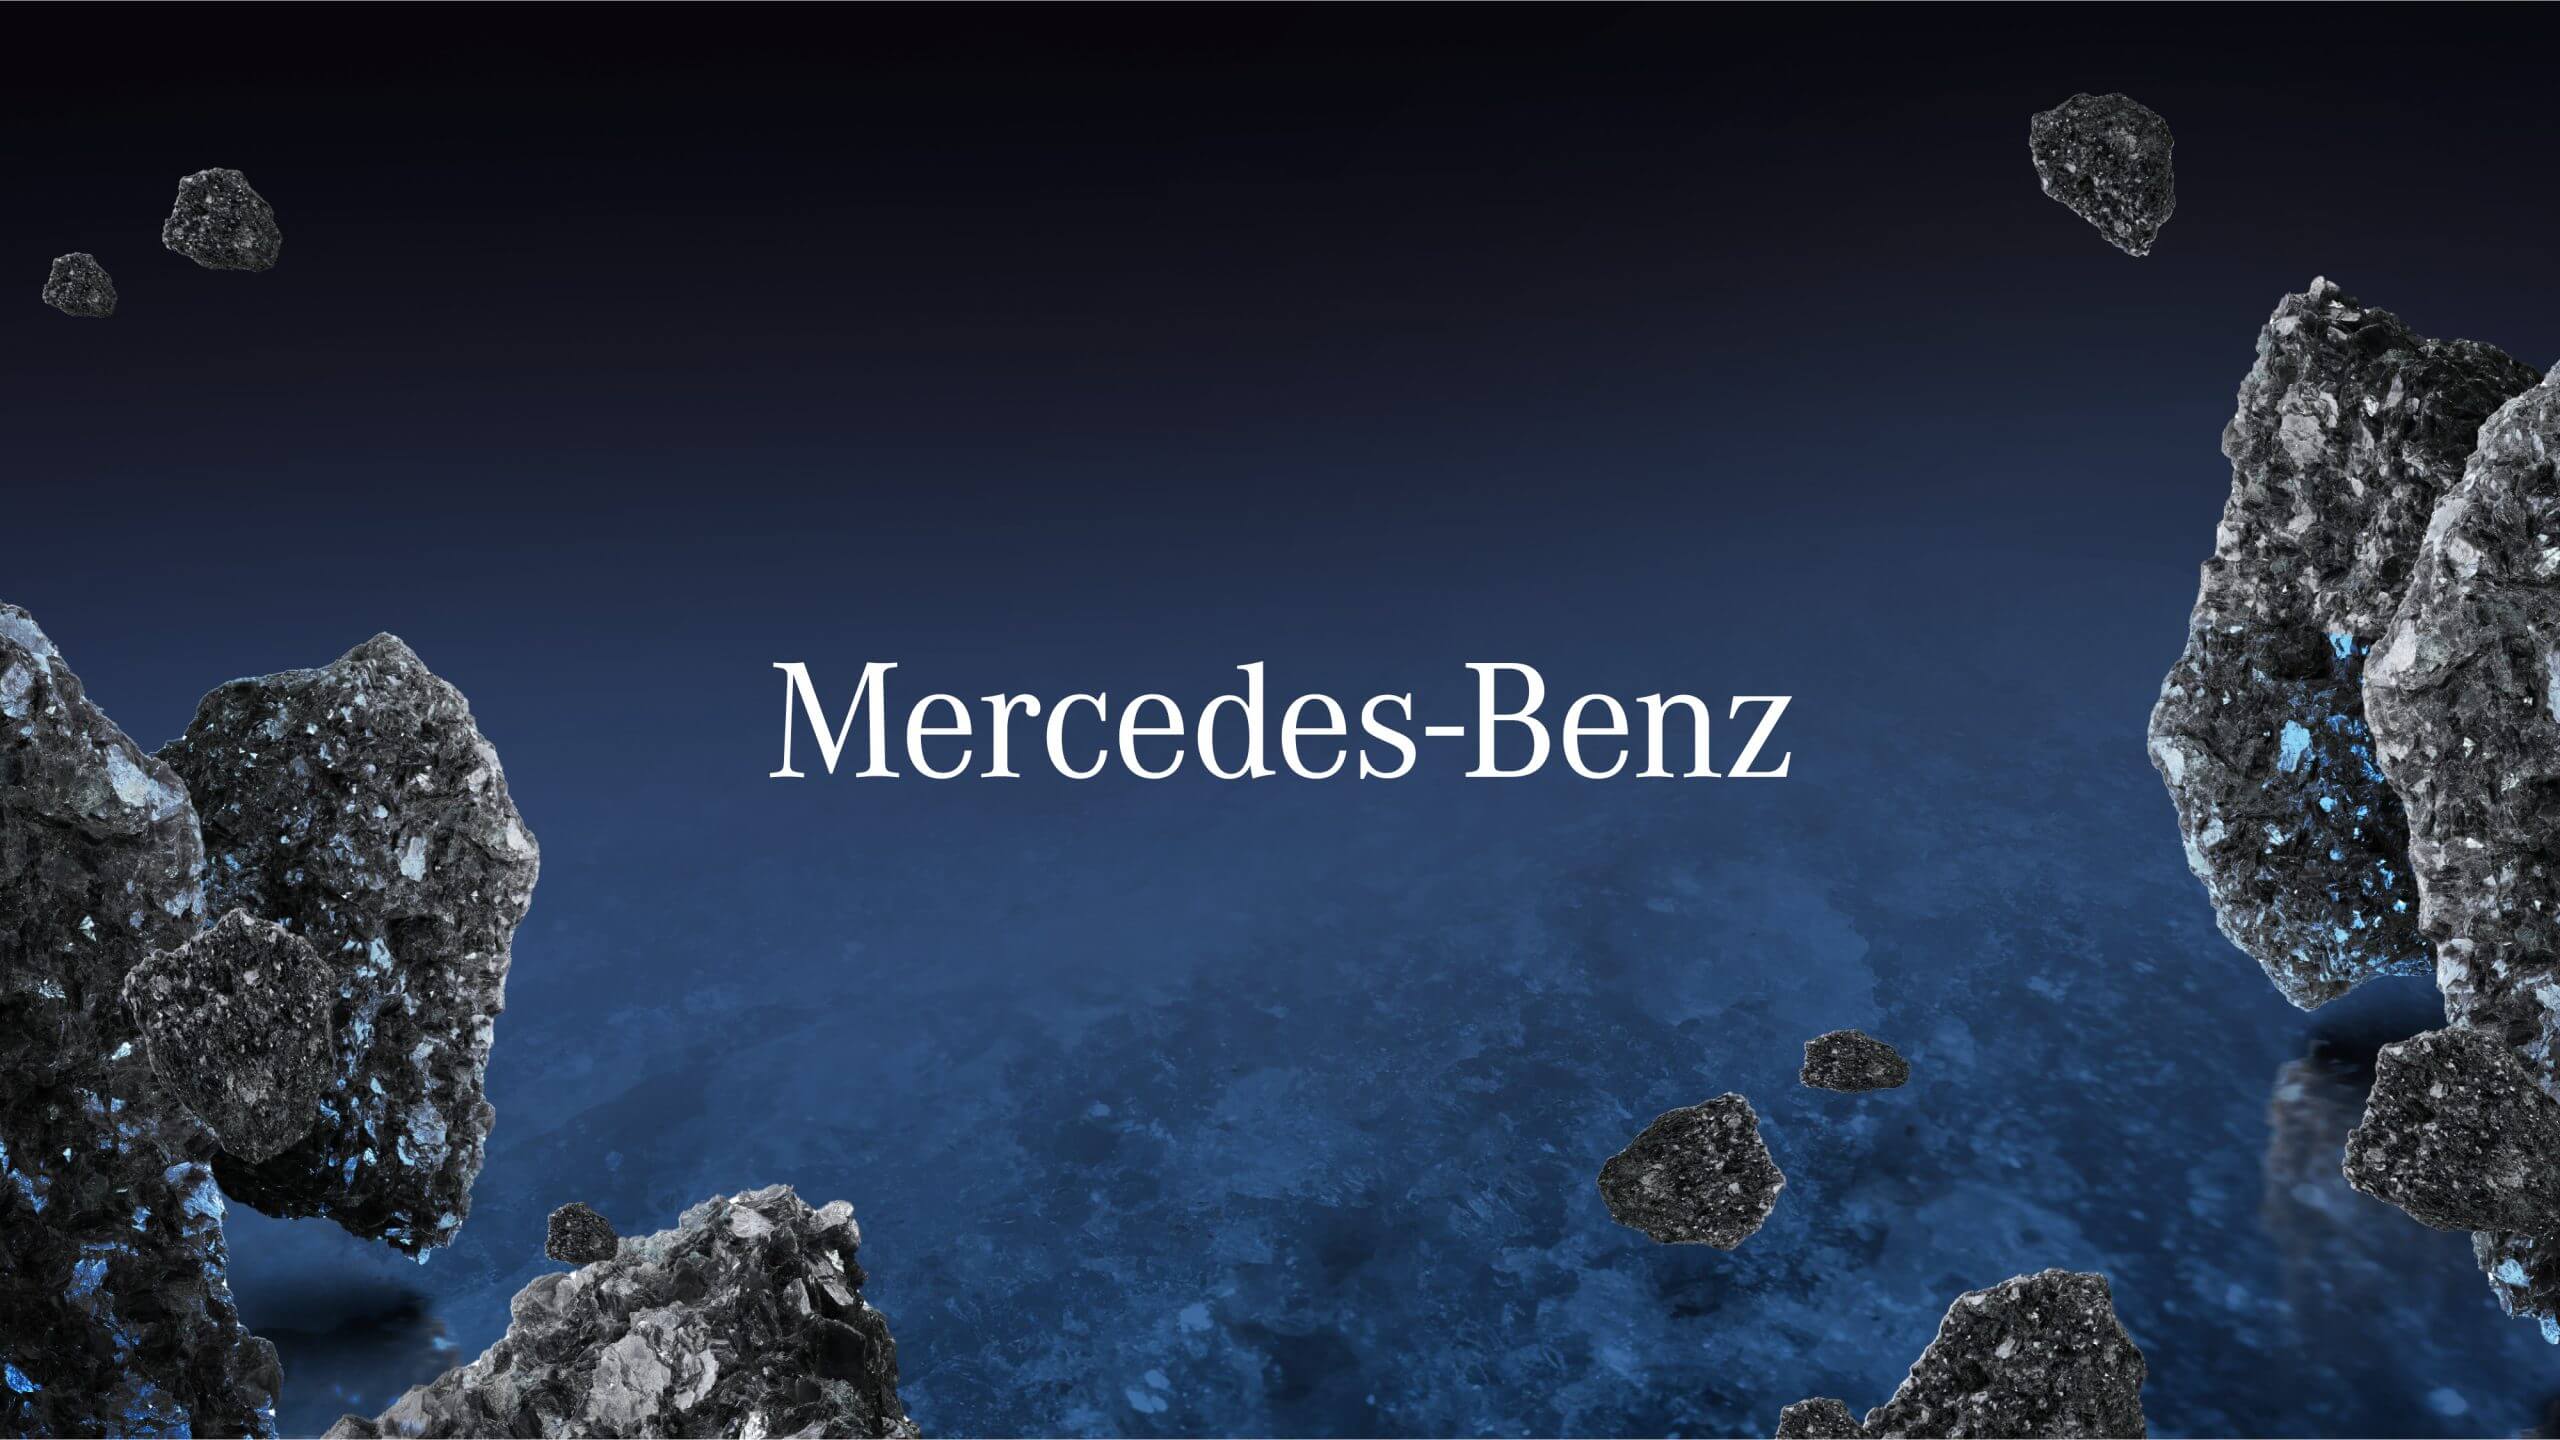 Mercedes menuju ke arah kebebasan bateri dengan penapisan litium baharu